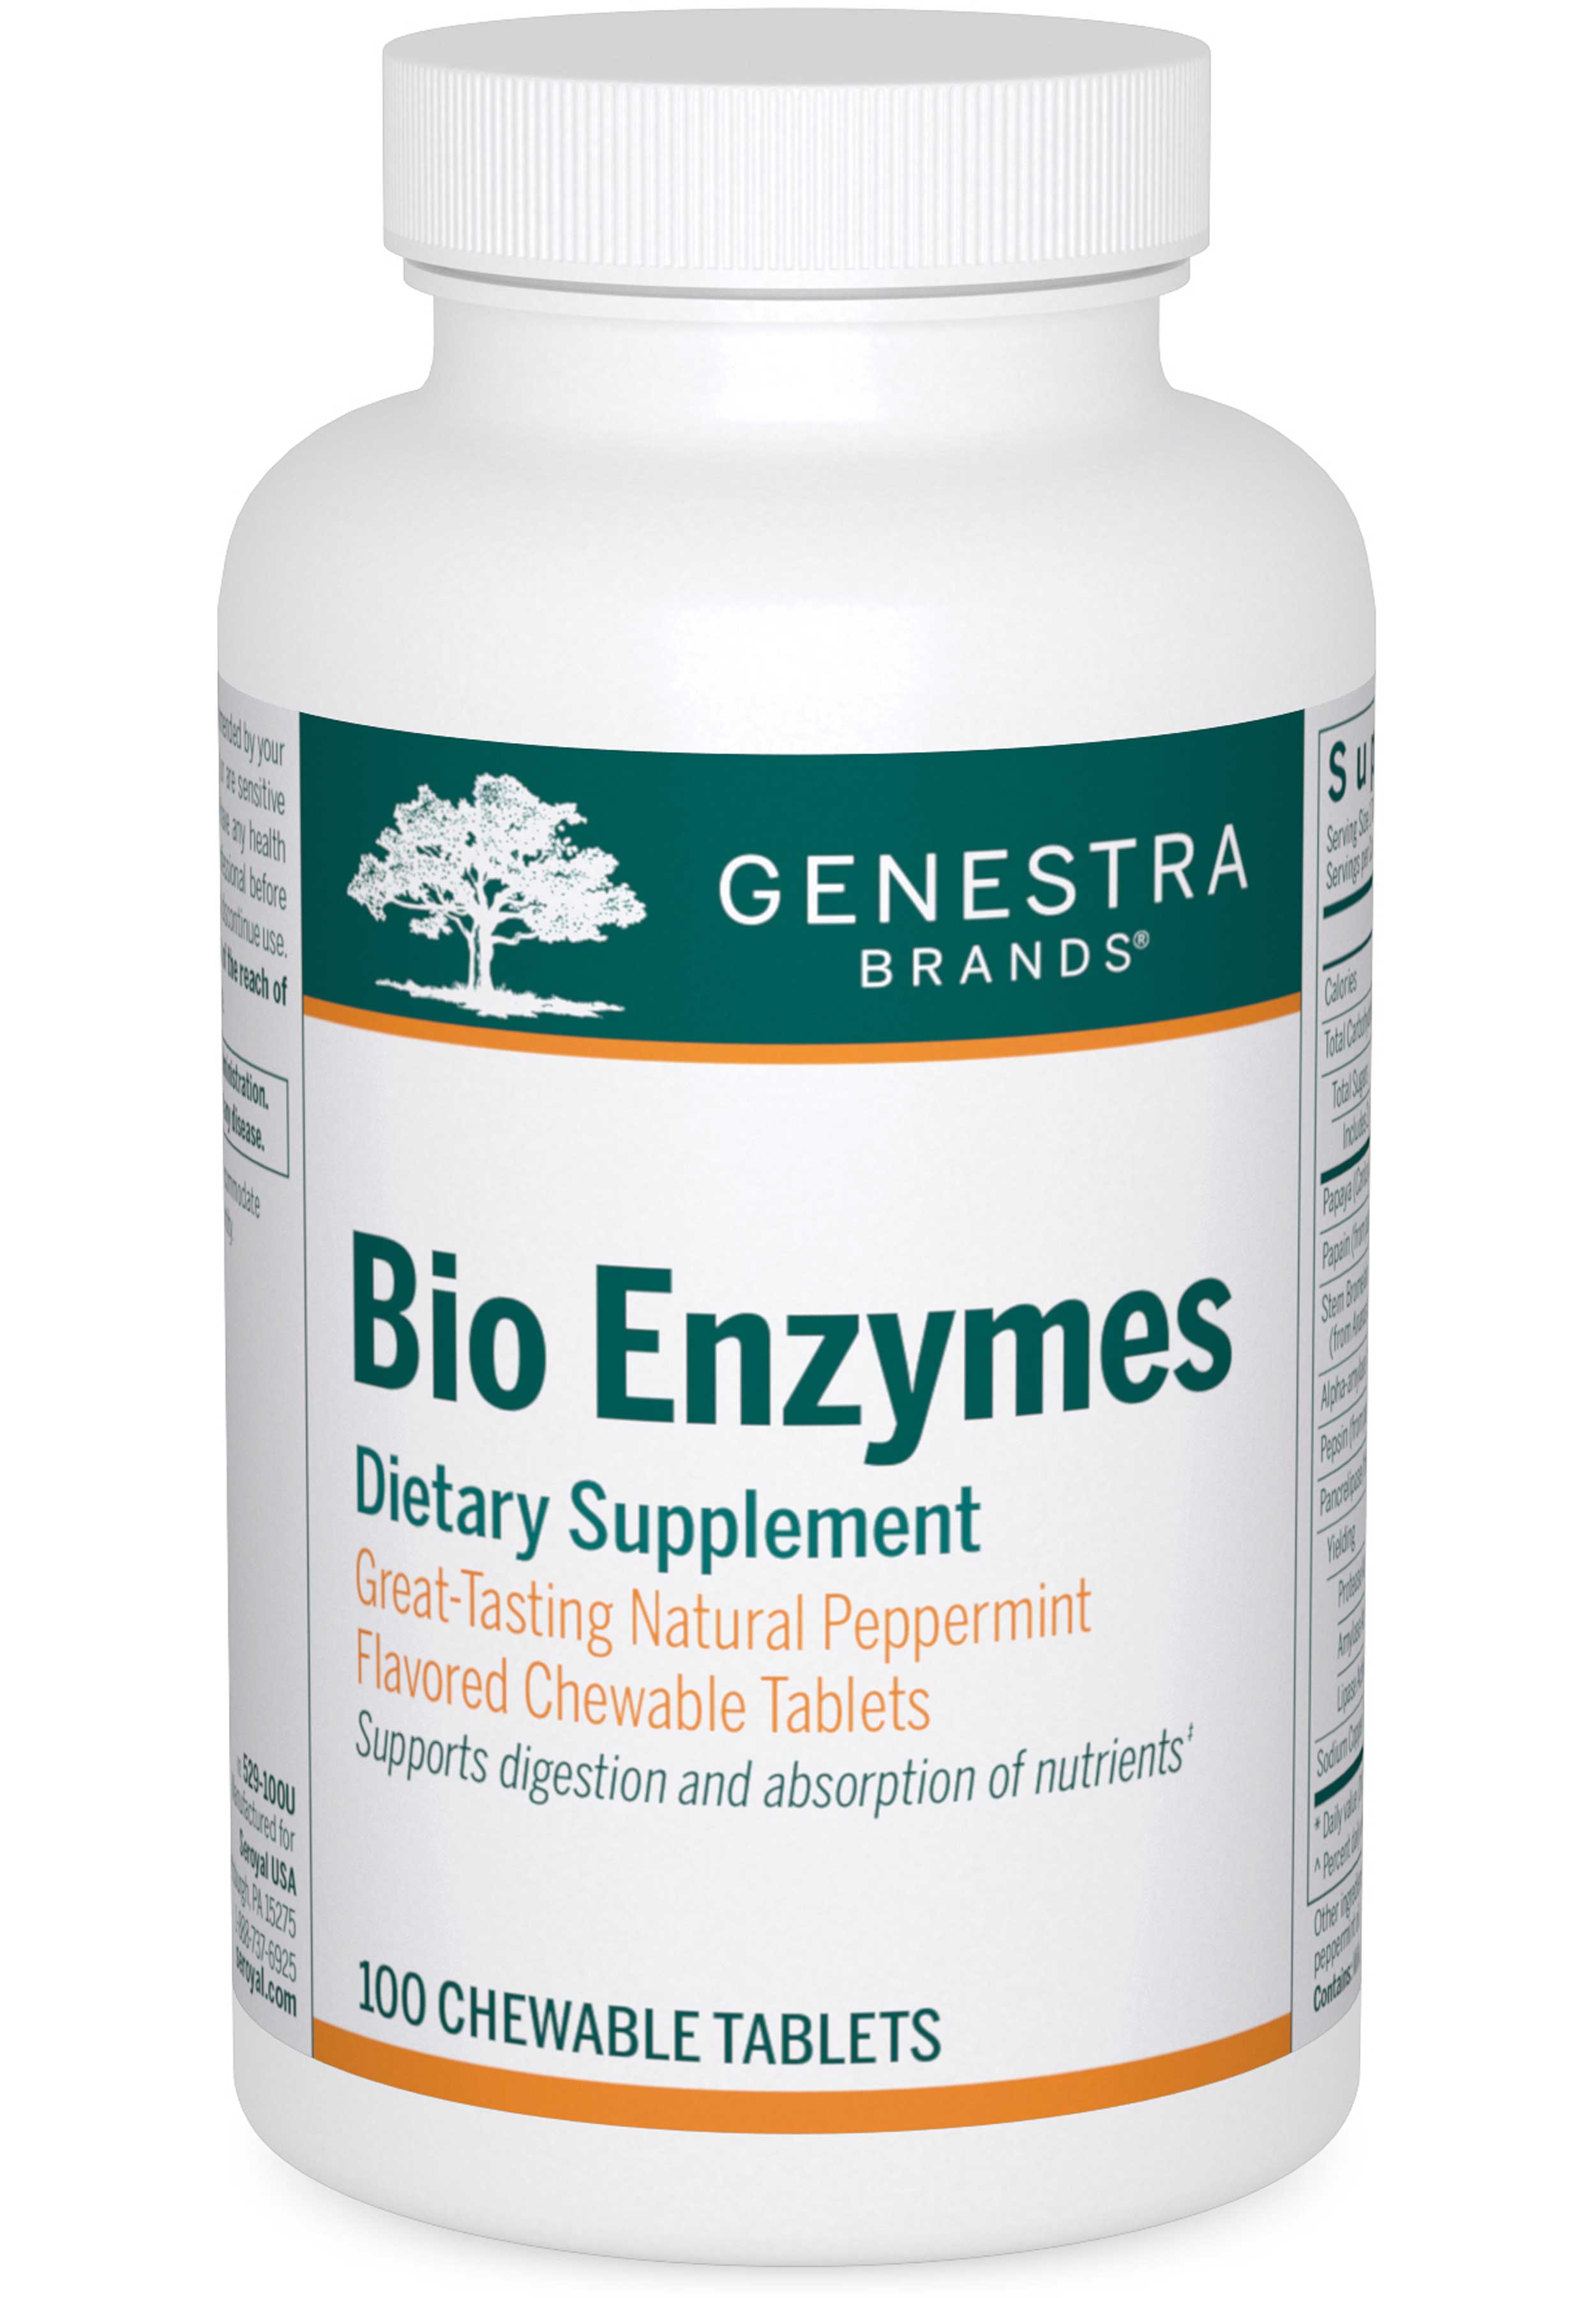 Genestra Brands Bio Enzymes